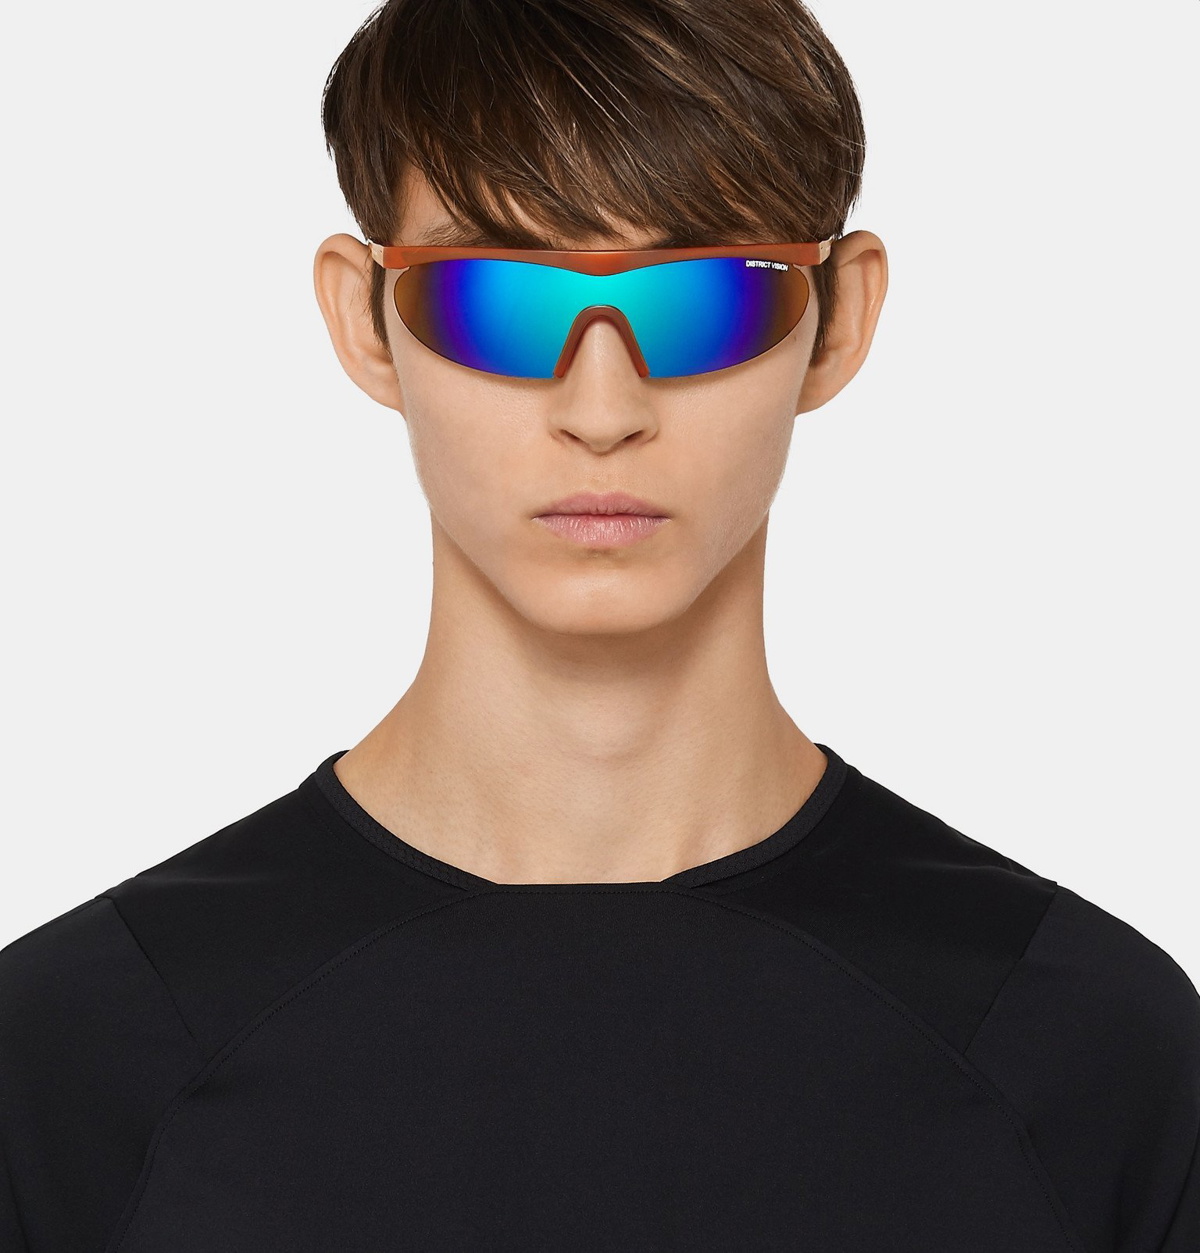 DISTRICT VISION Koharu Polycarbonate Mirrored Sunglasses for Men